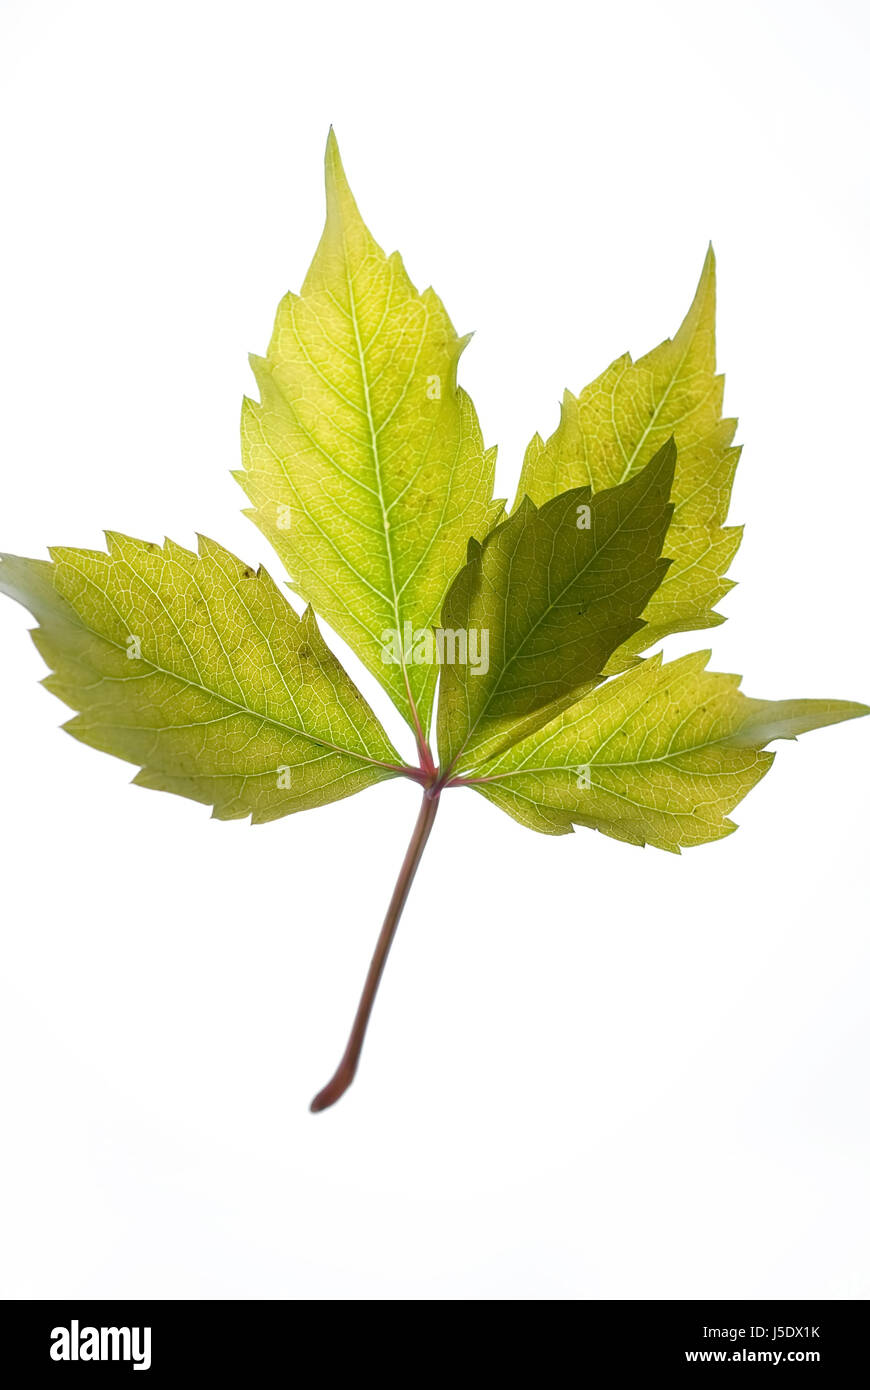 autumn leaf 06 Stock Photo